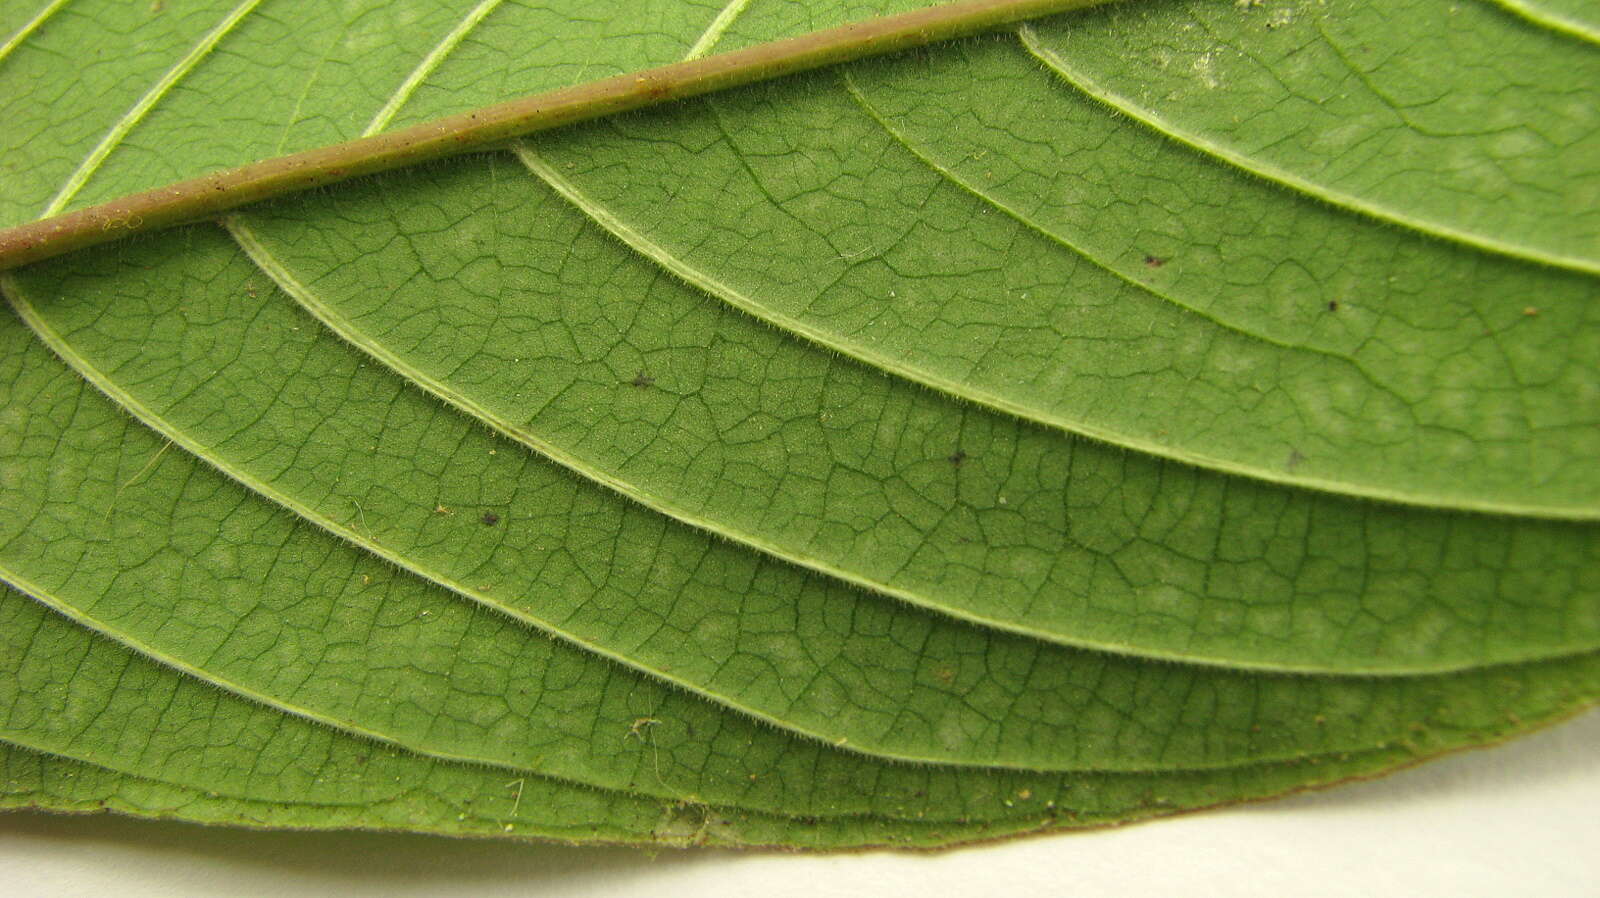 Image of Palicourea bracteocardia (DC.) Delprete & J. H. Kirkbr.